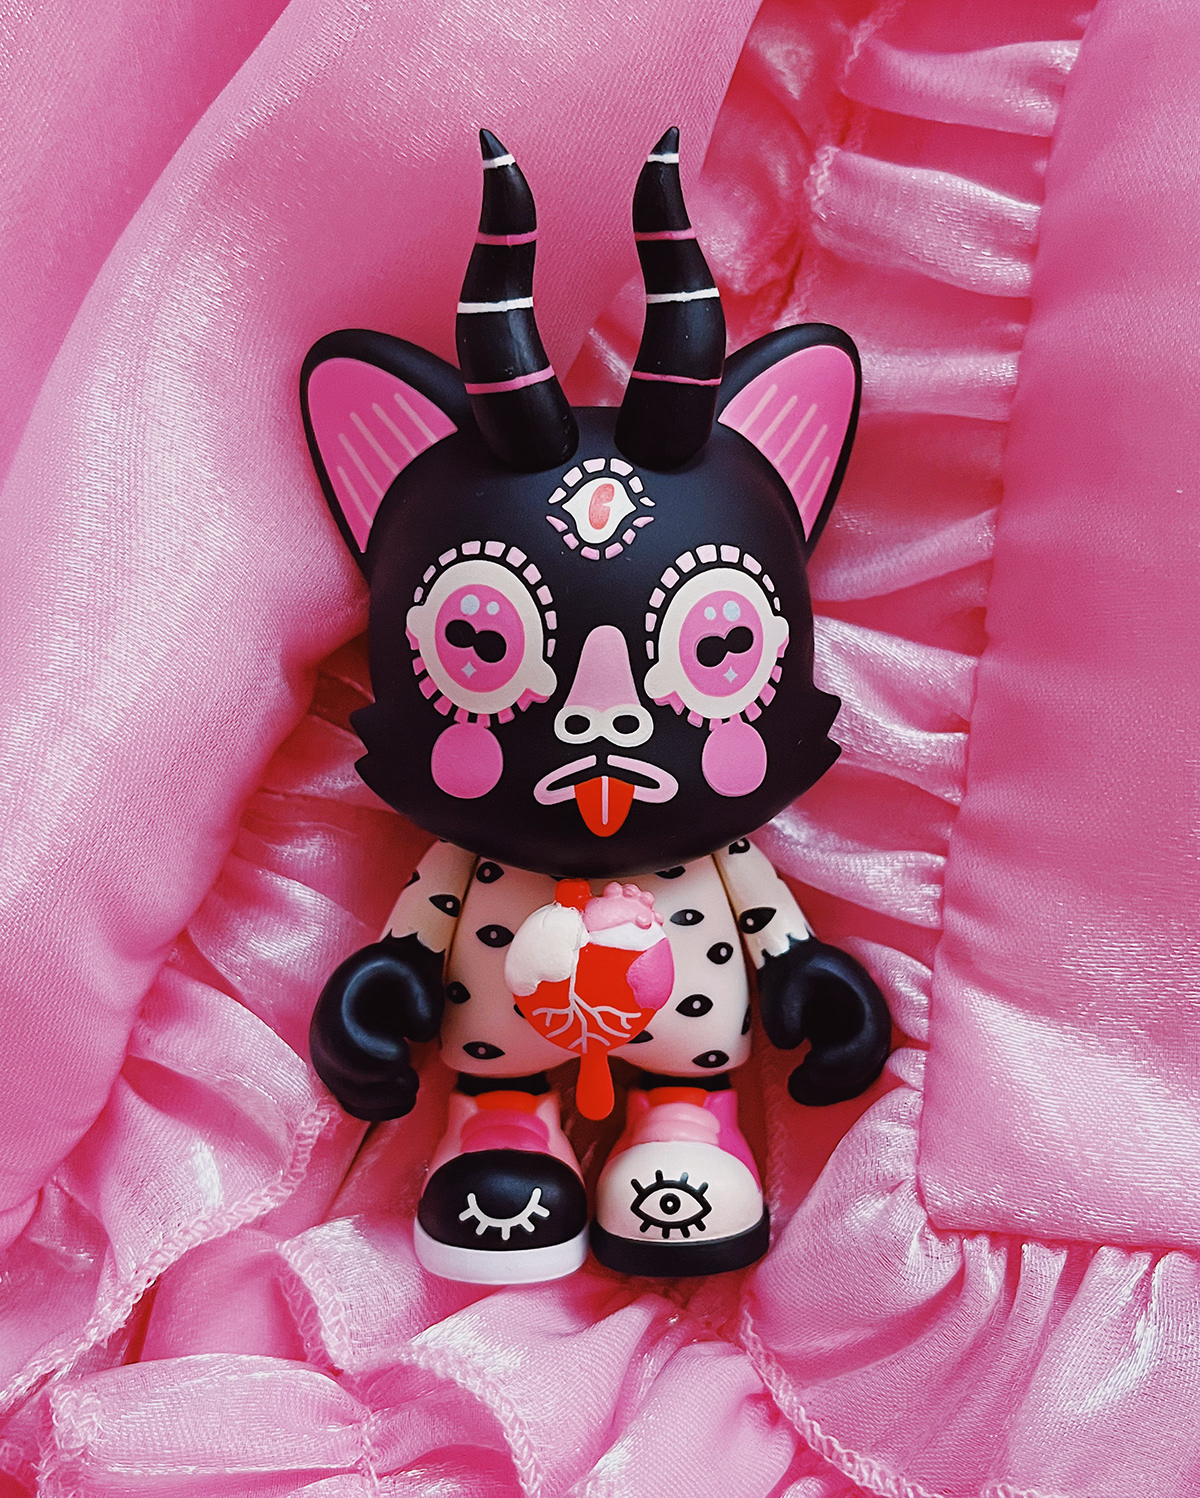 art toy collectible demon Baphomet kawaii cute El Salvador superplastic